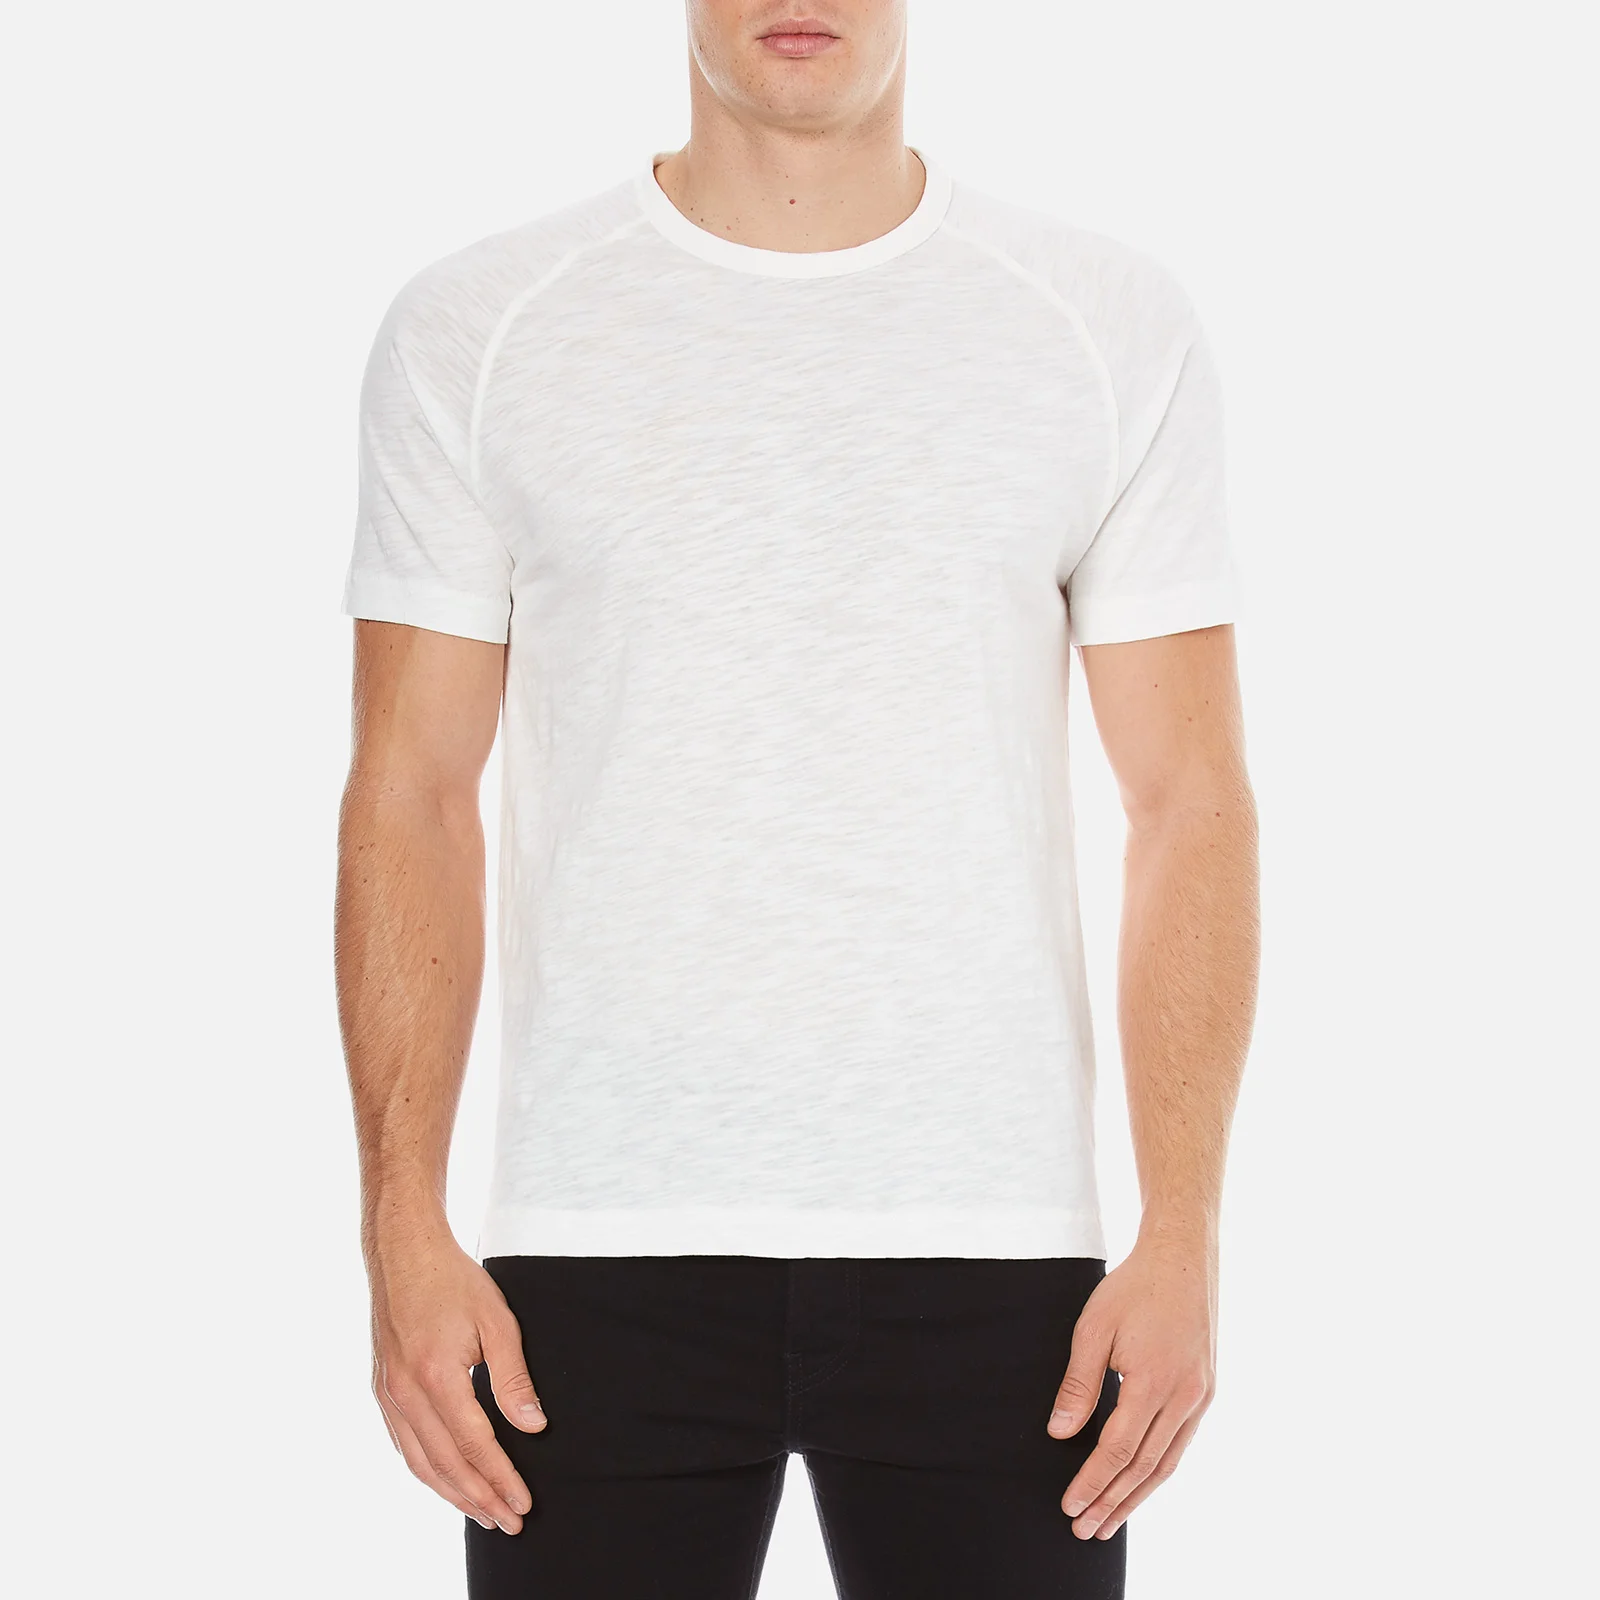 YMC Men's Television T-Shirt - White Image 1